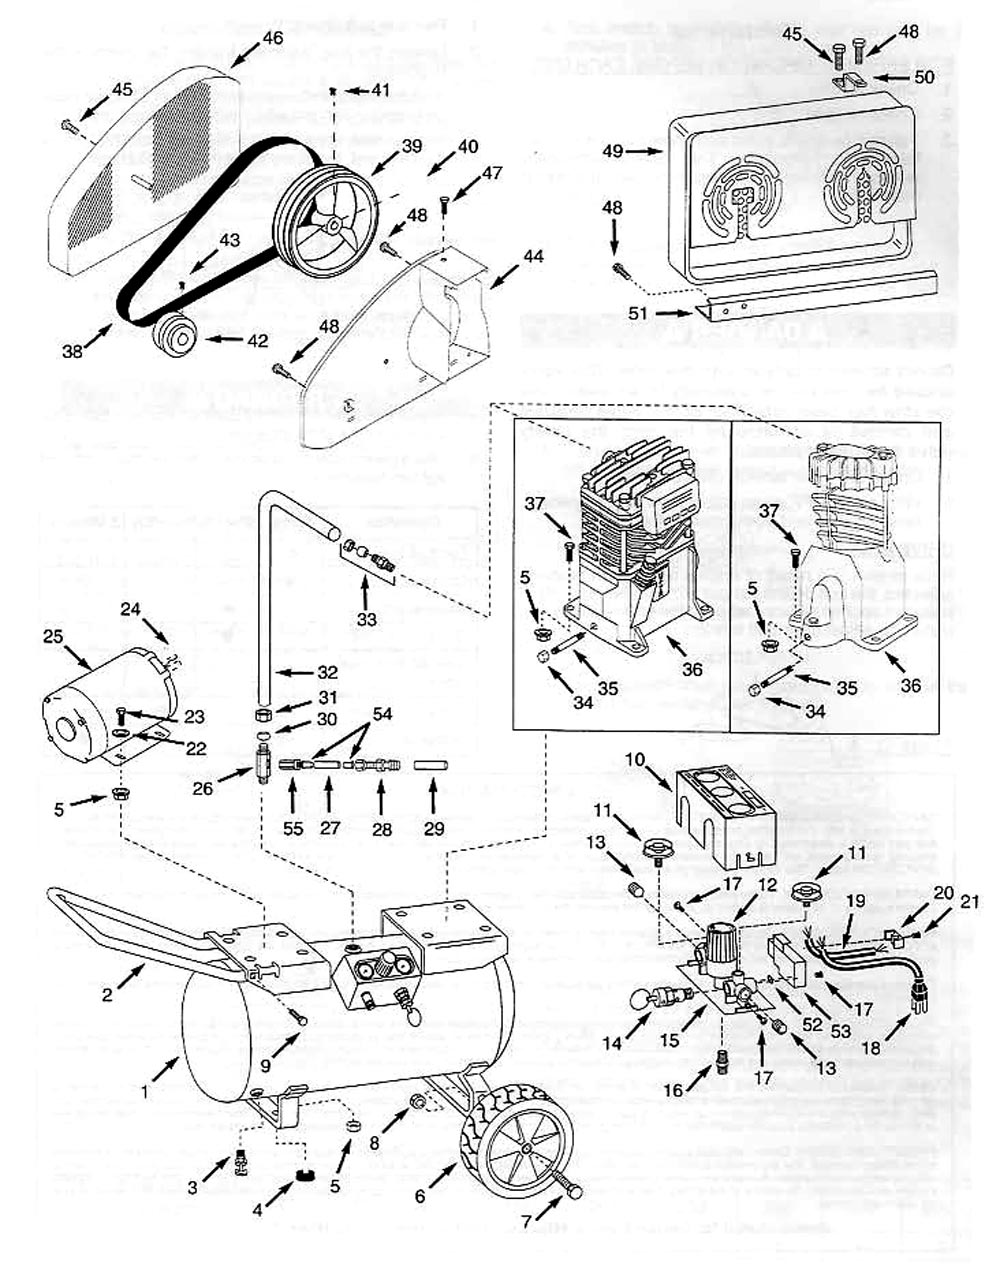 Older craftsman air compressor manual